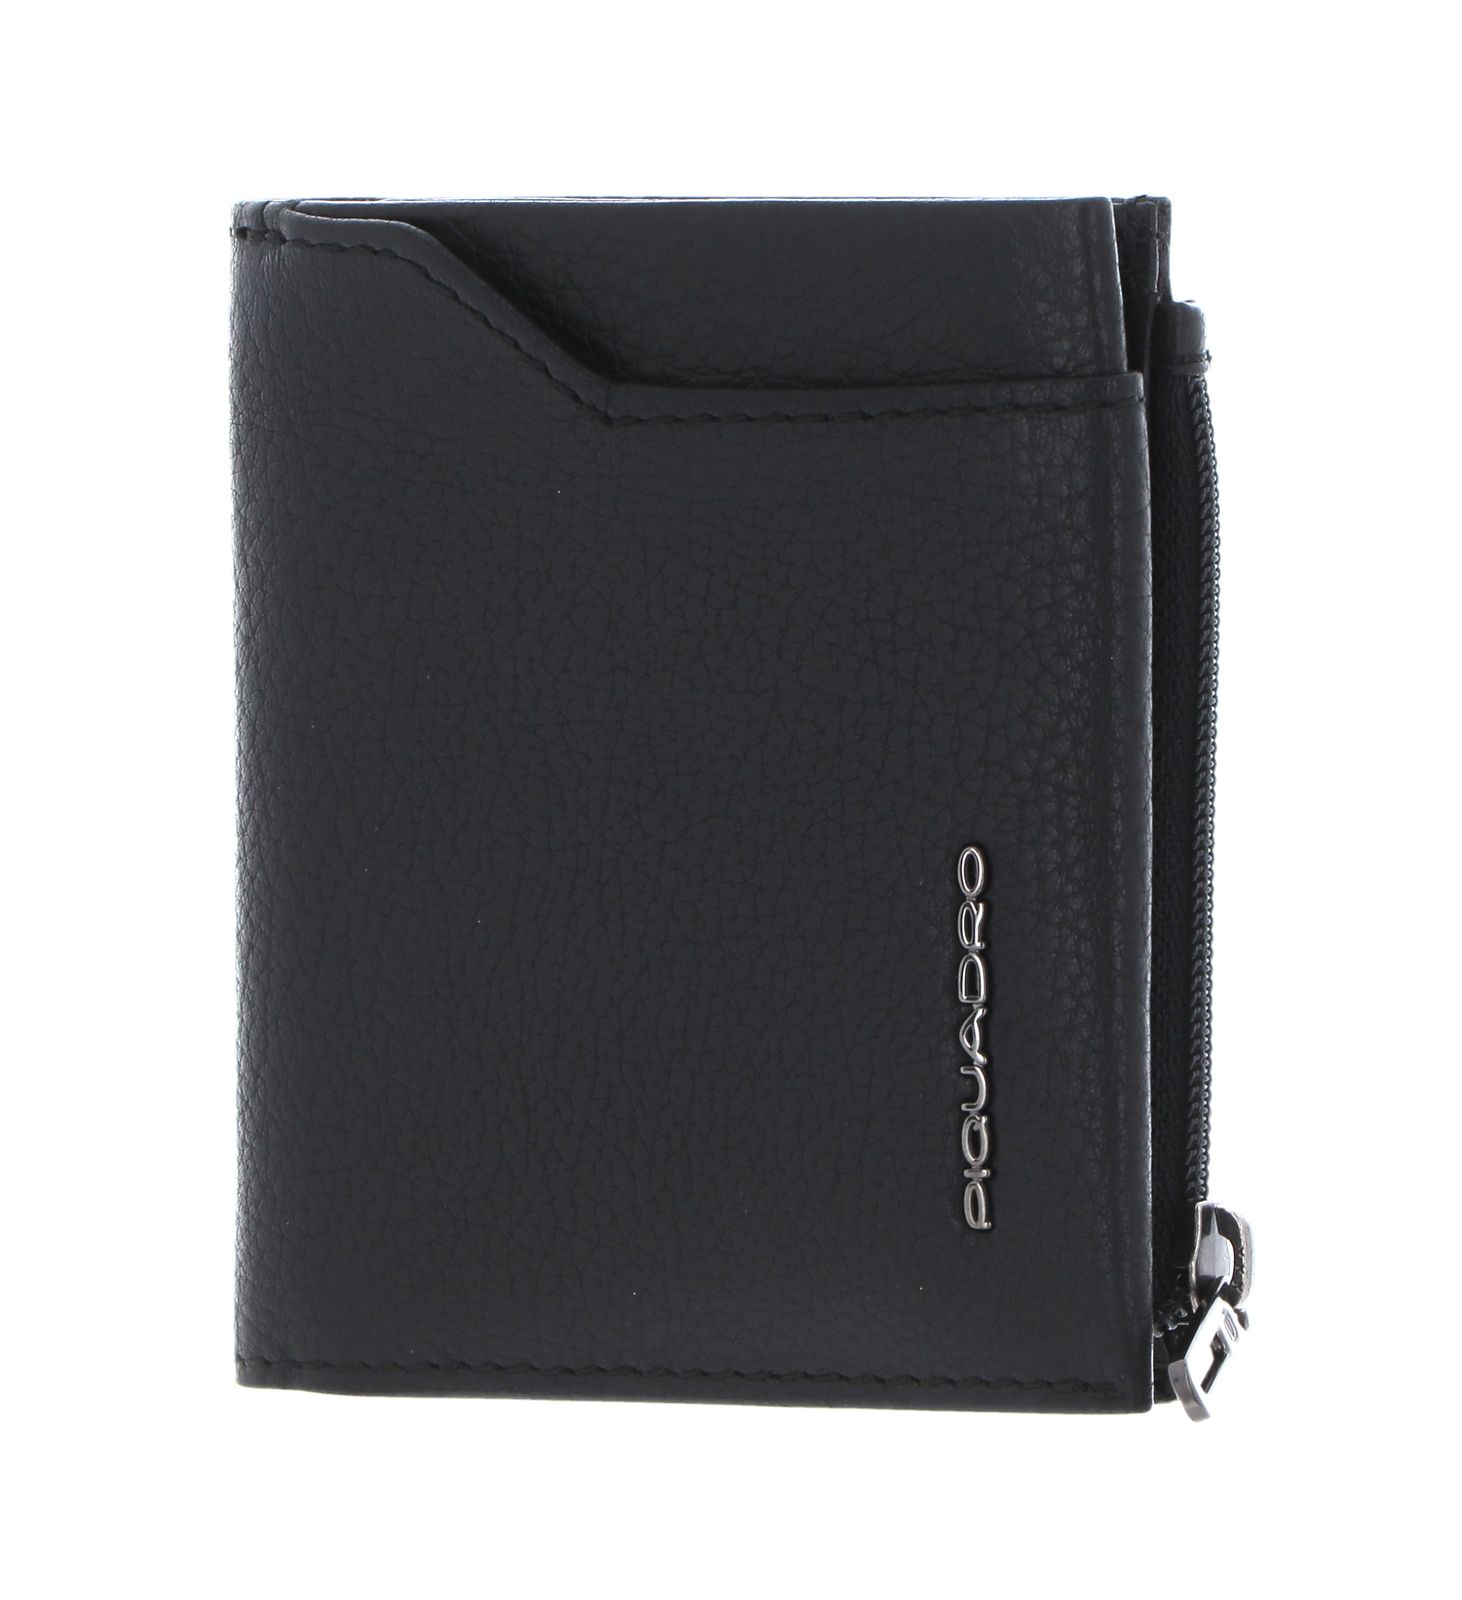 PIQUADRO Mini RFID Wallet Nero | Buy bags, purses & accessories online ...